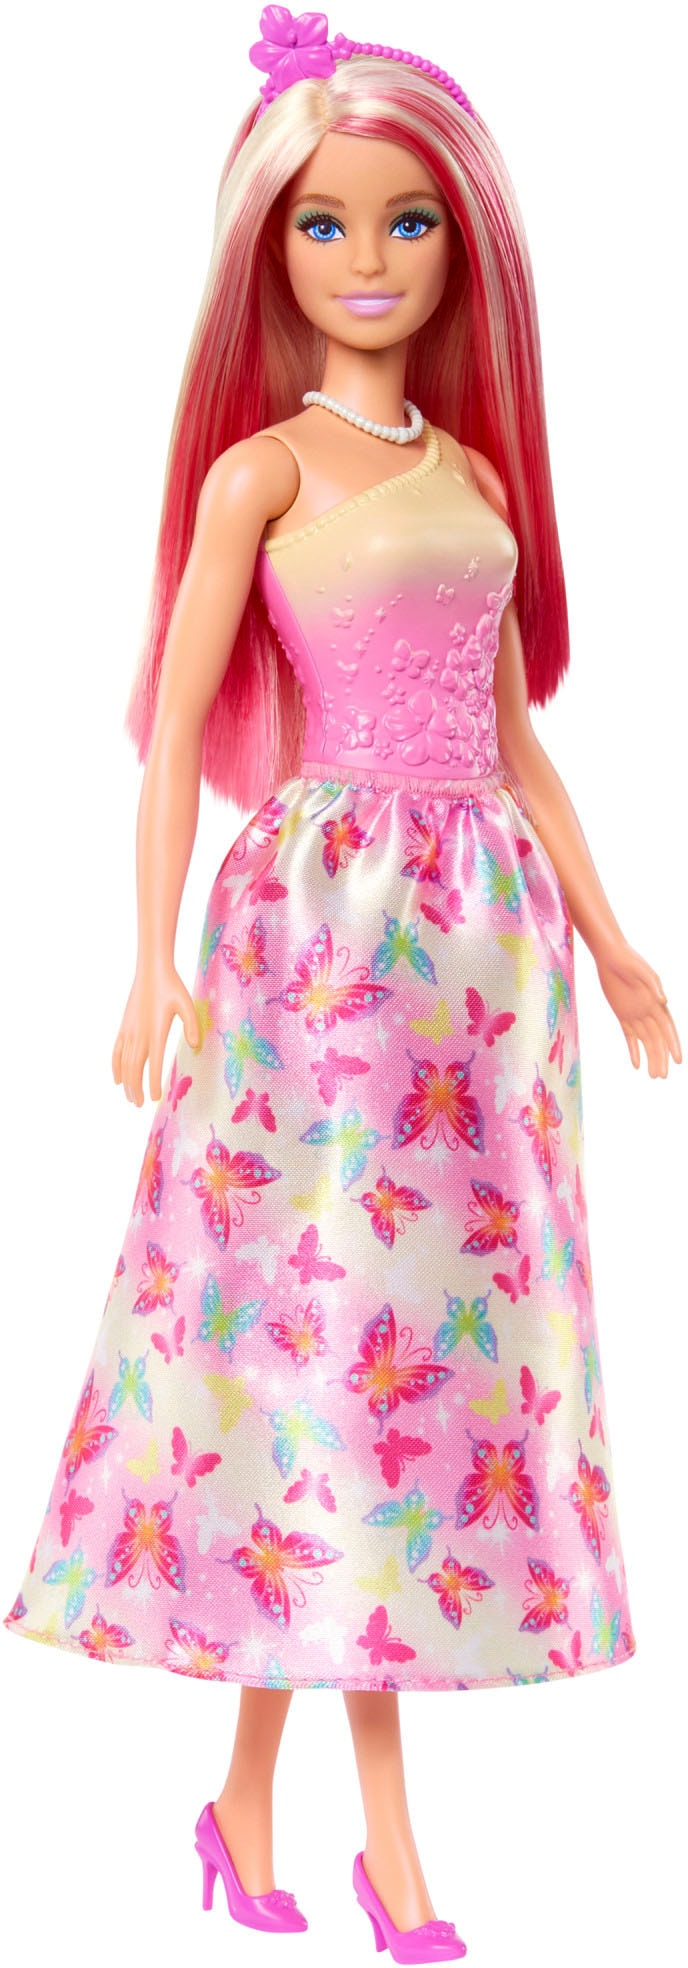 Barbie Anziehpuppe »Royal_1«, in Regenbogenfarben